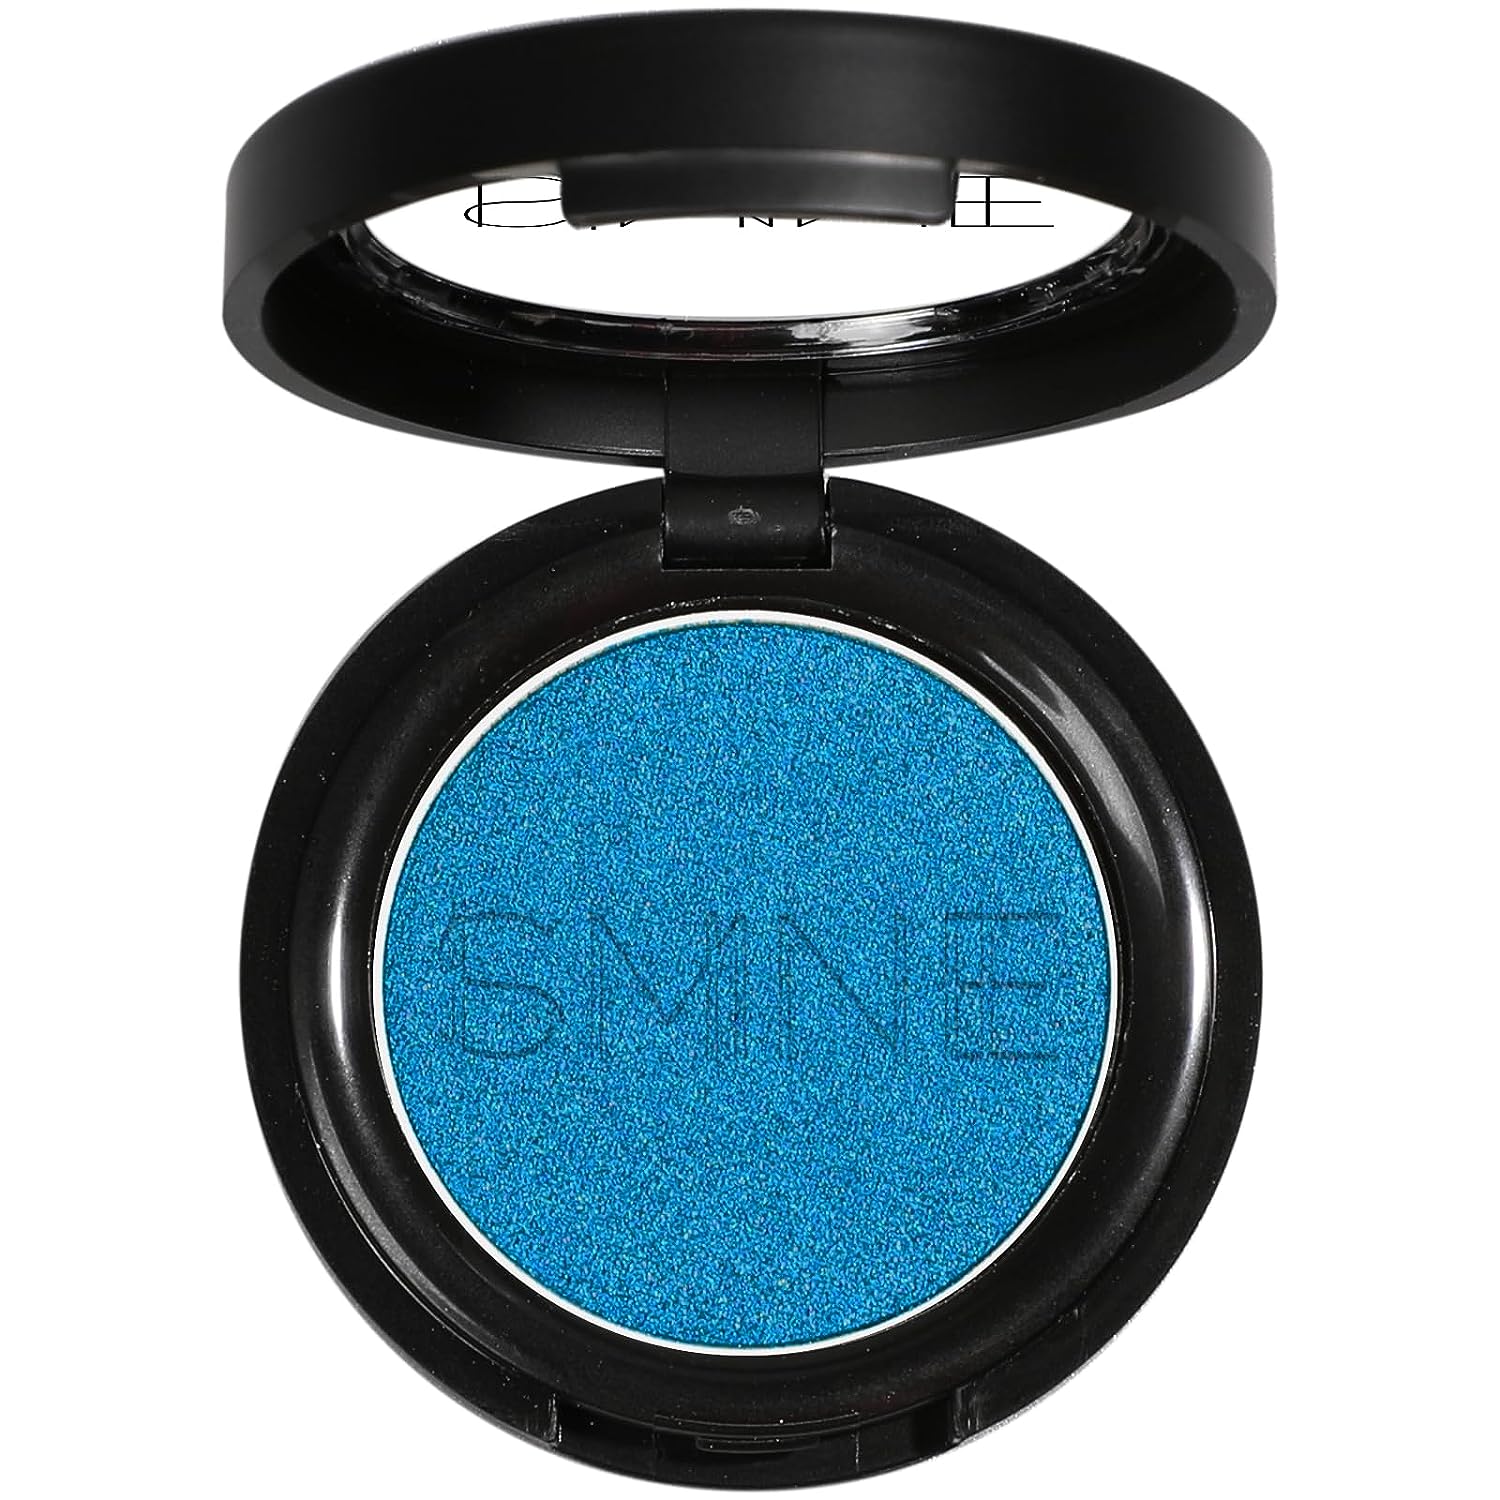 IS'MINE Single Blue Shimmer Eyeshadow Powder Palette High Pigment, Longwear, Intense Color Best Blue Eyeshadow